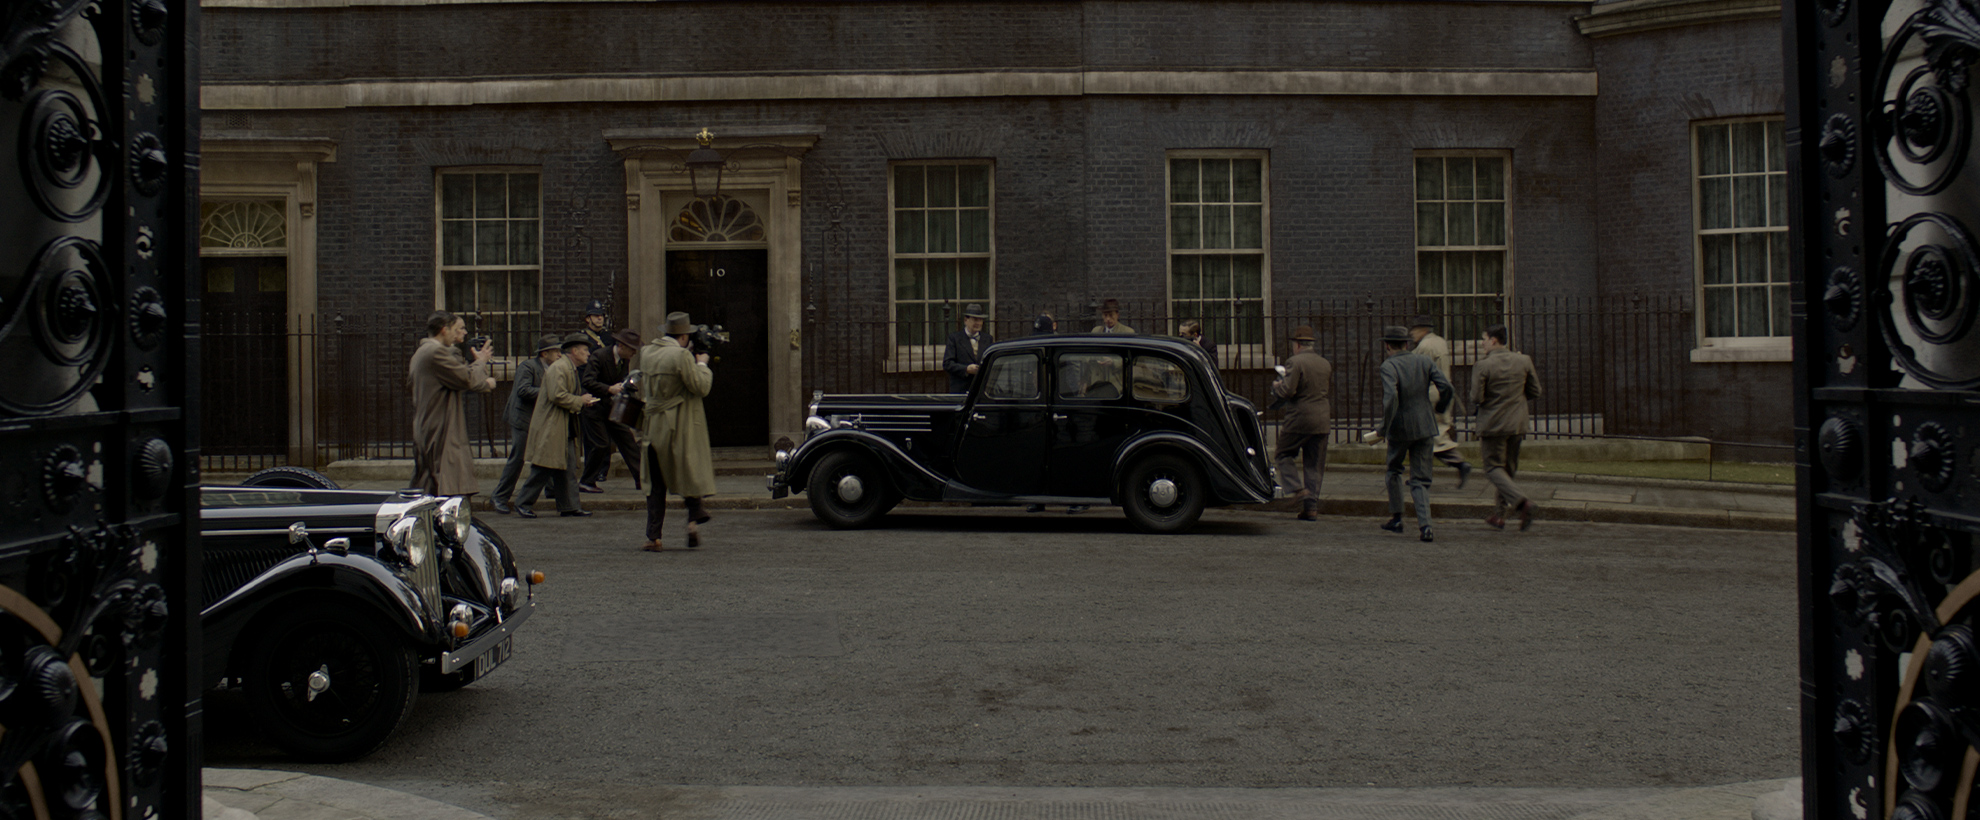 A vintage black car pulls up outside number 10 Downing Street, pursued by men on foot